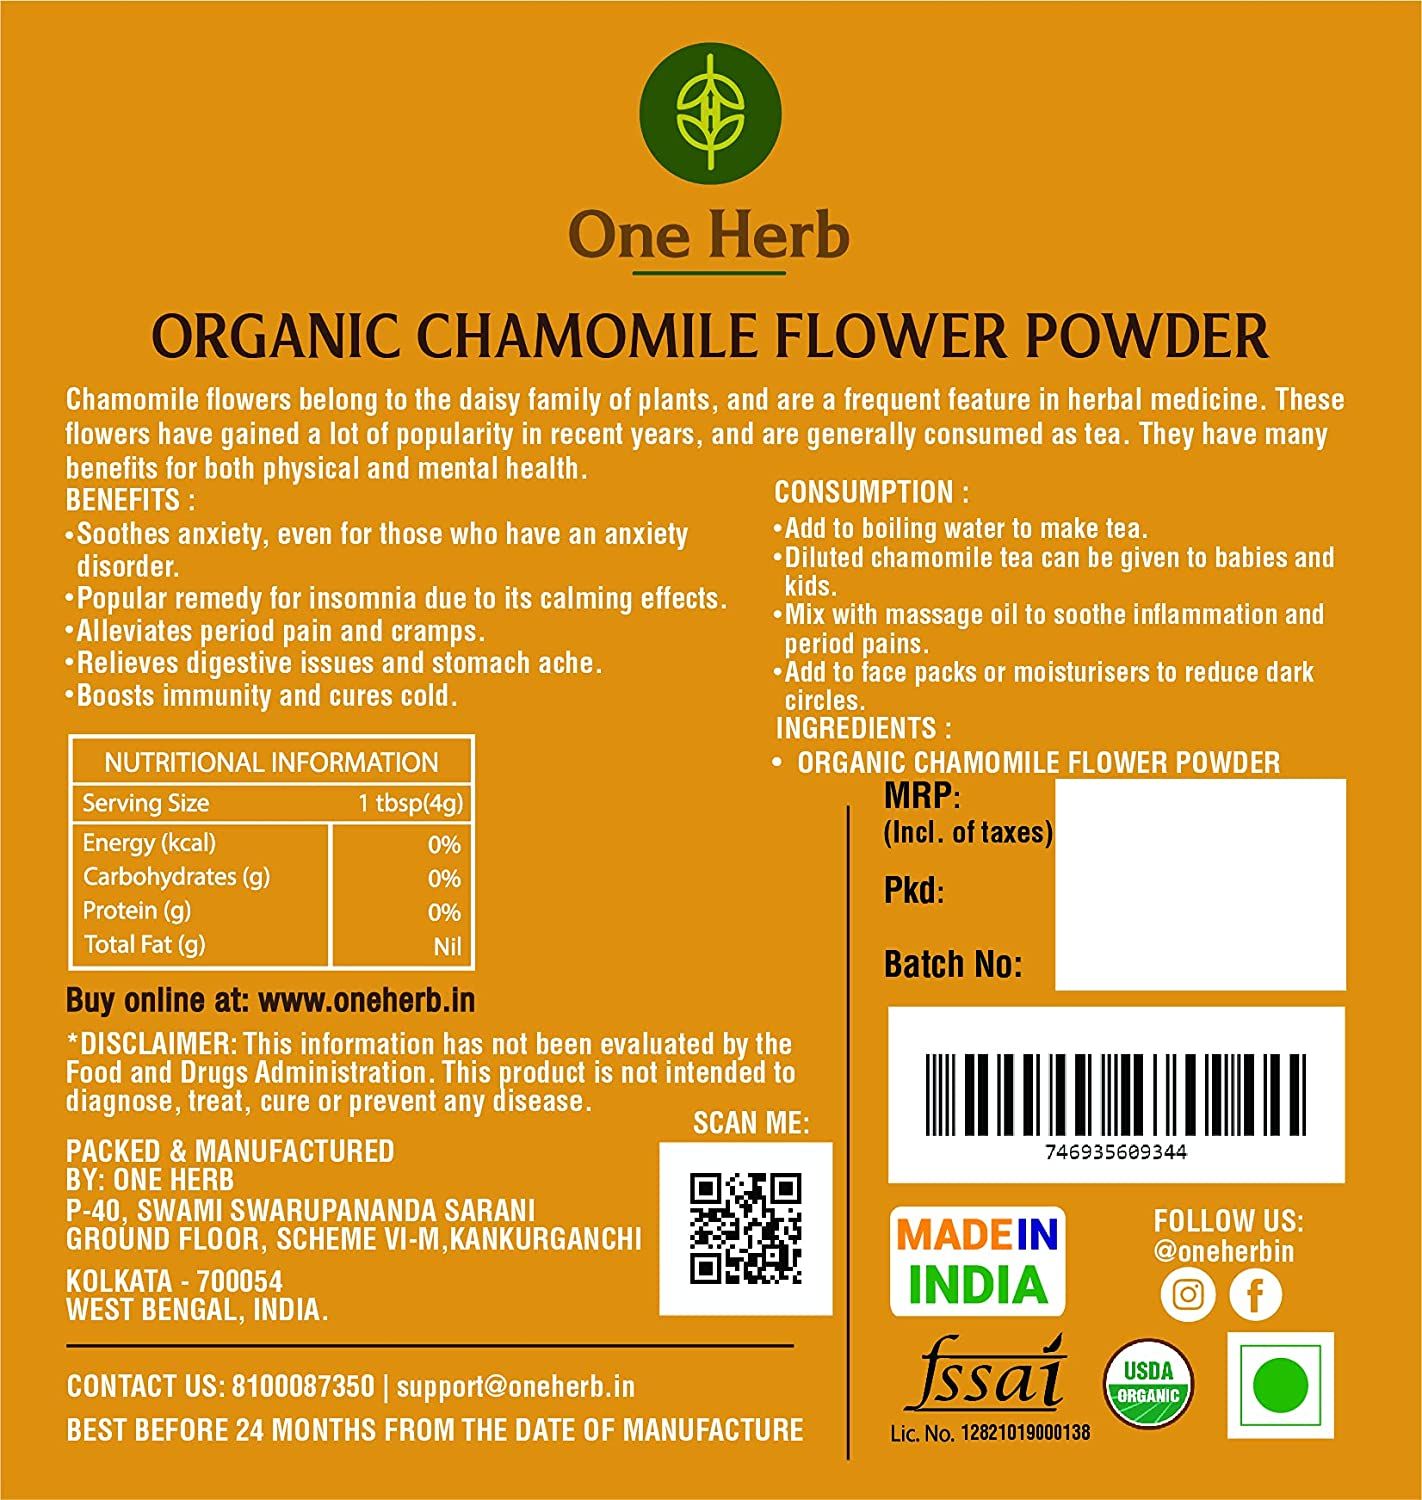 One Herb Organic Chamomile Flower Powder Image